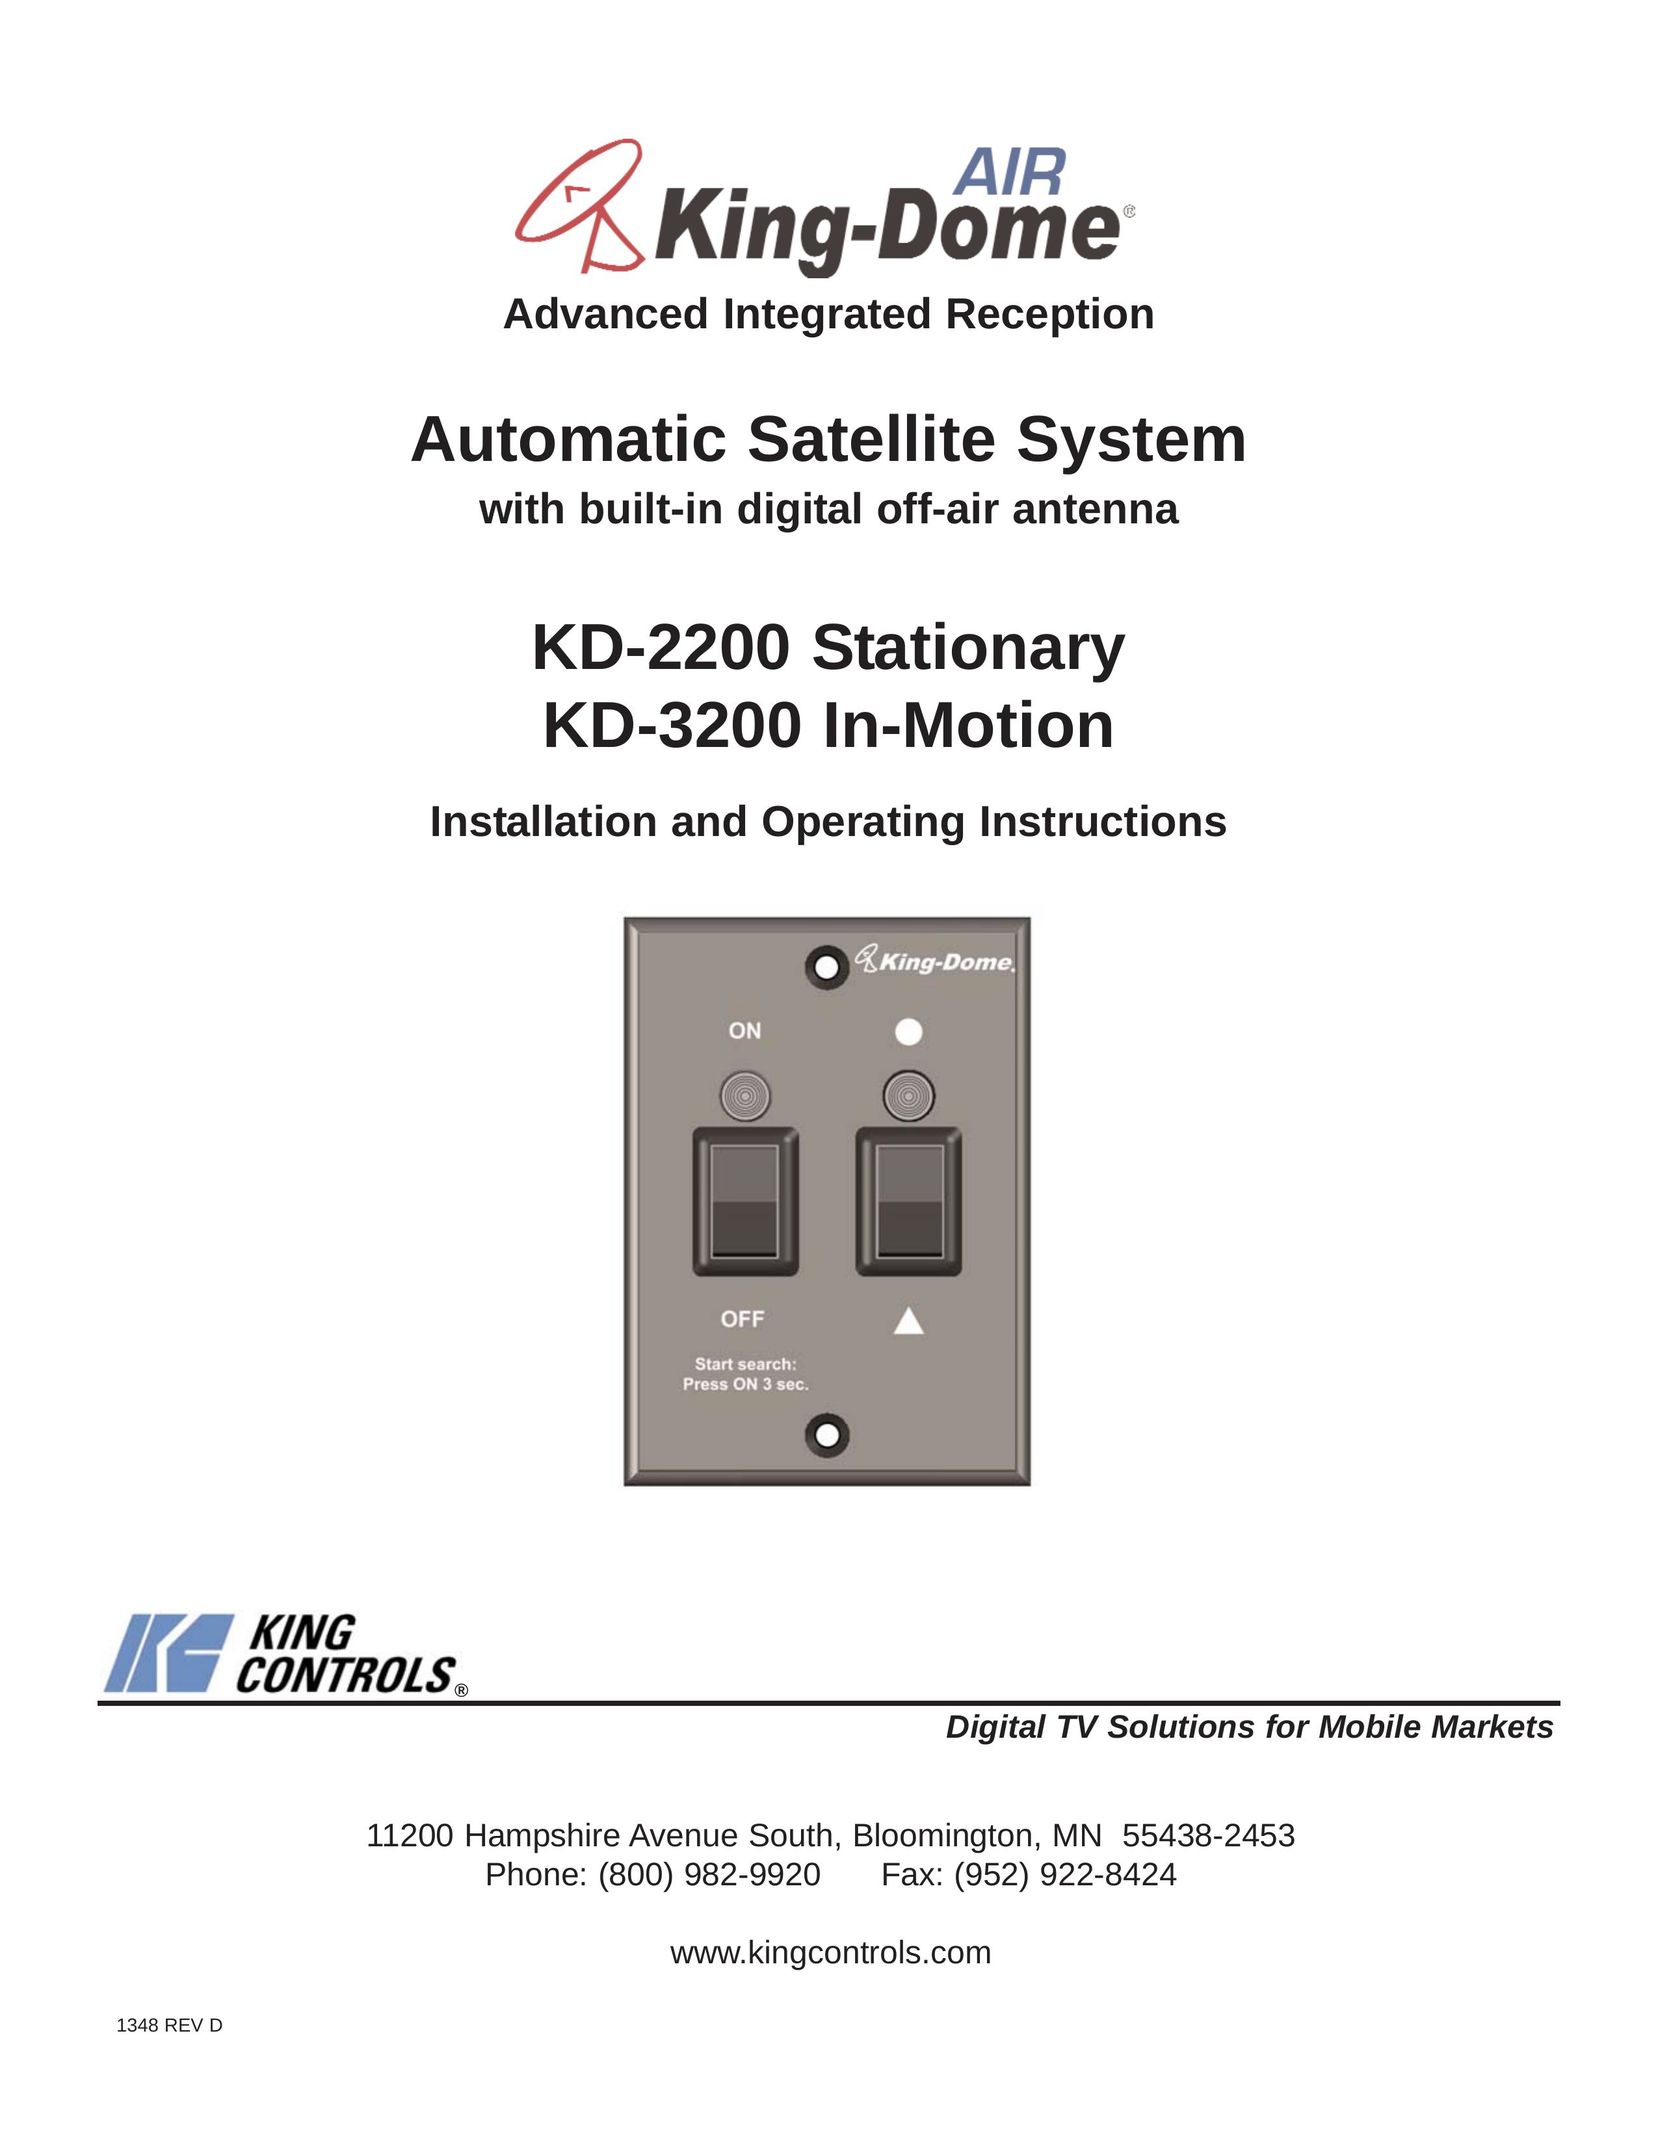 King Controls KD-3200 Satellite TV System User Manual